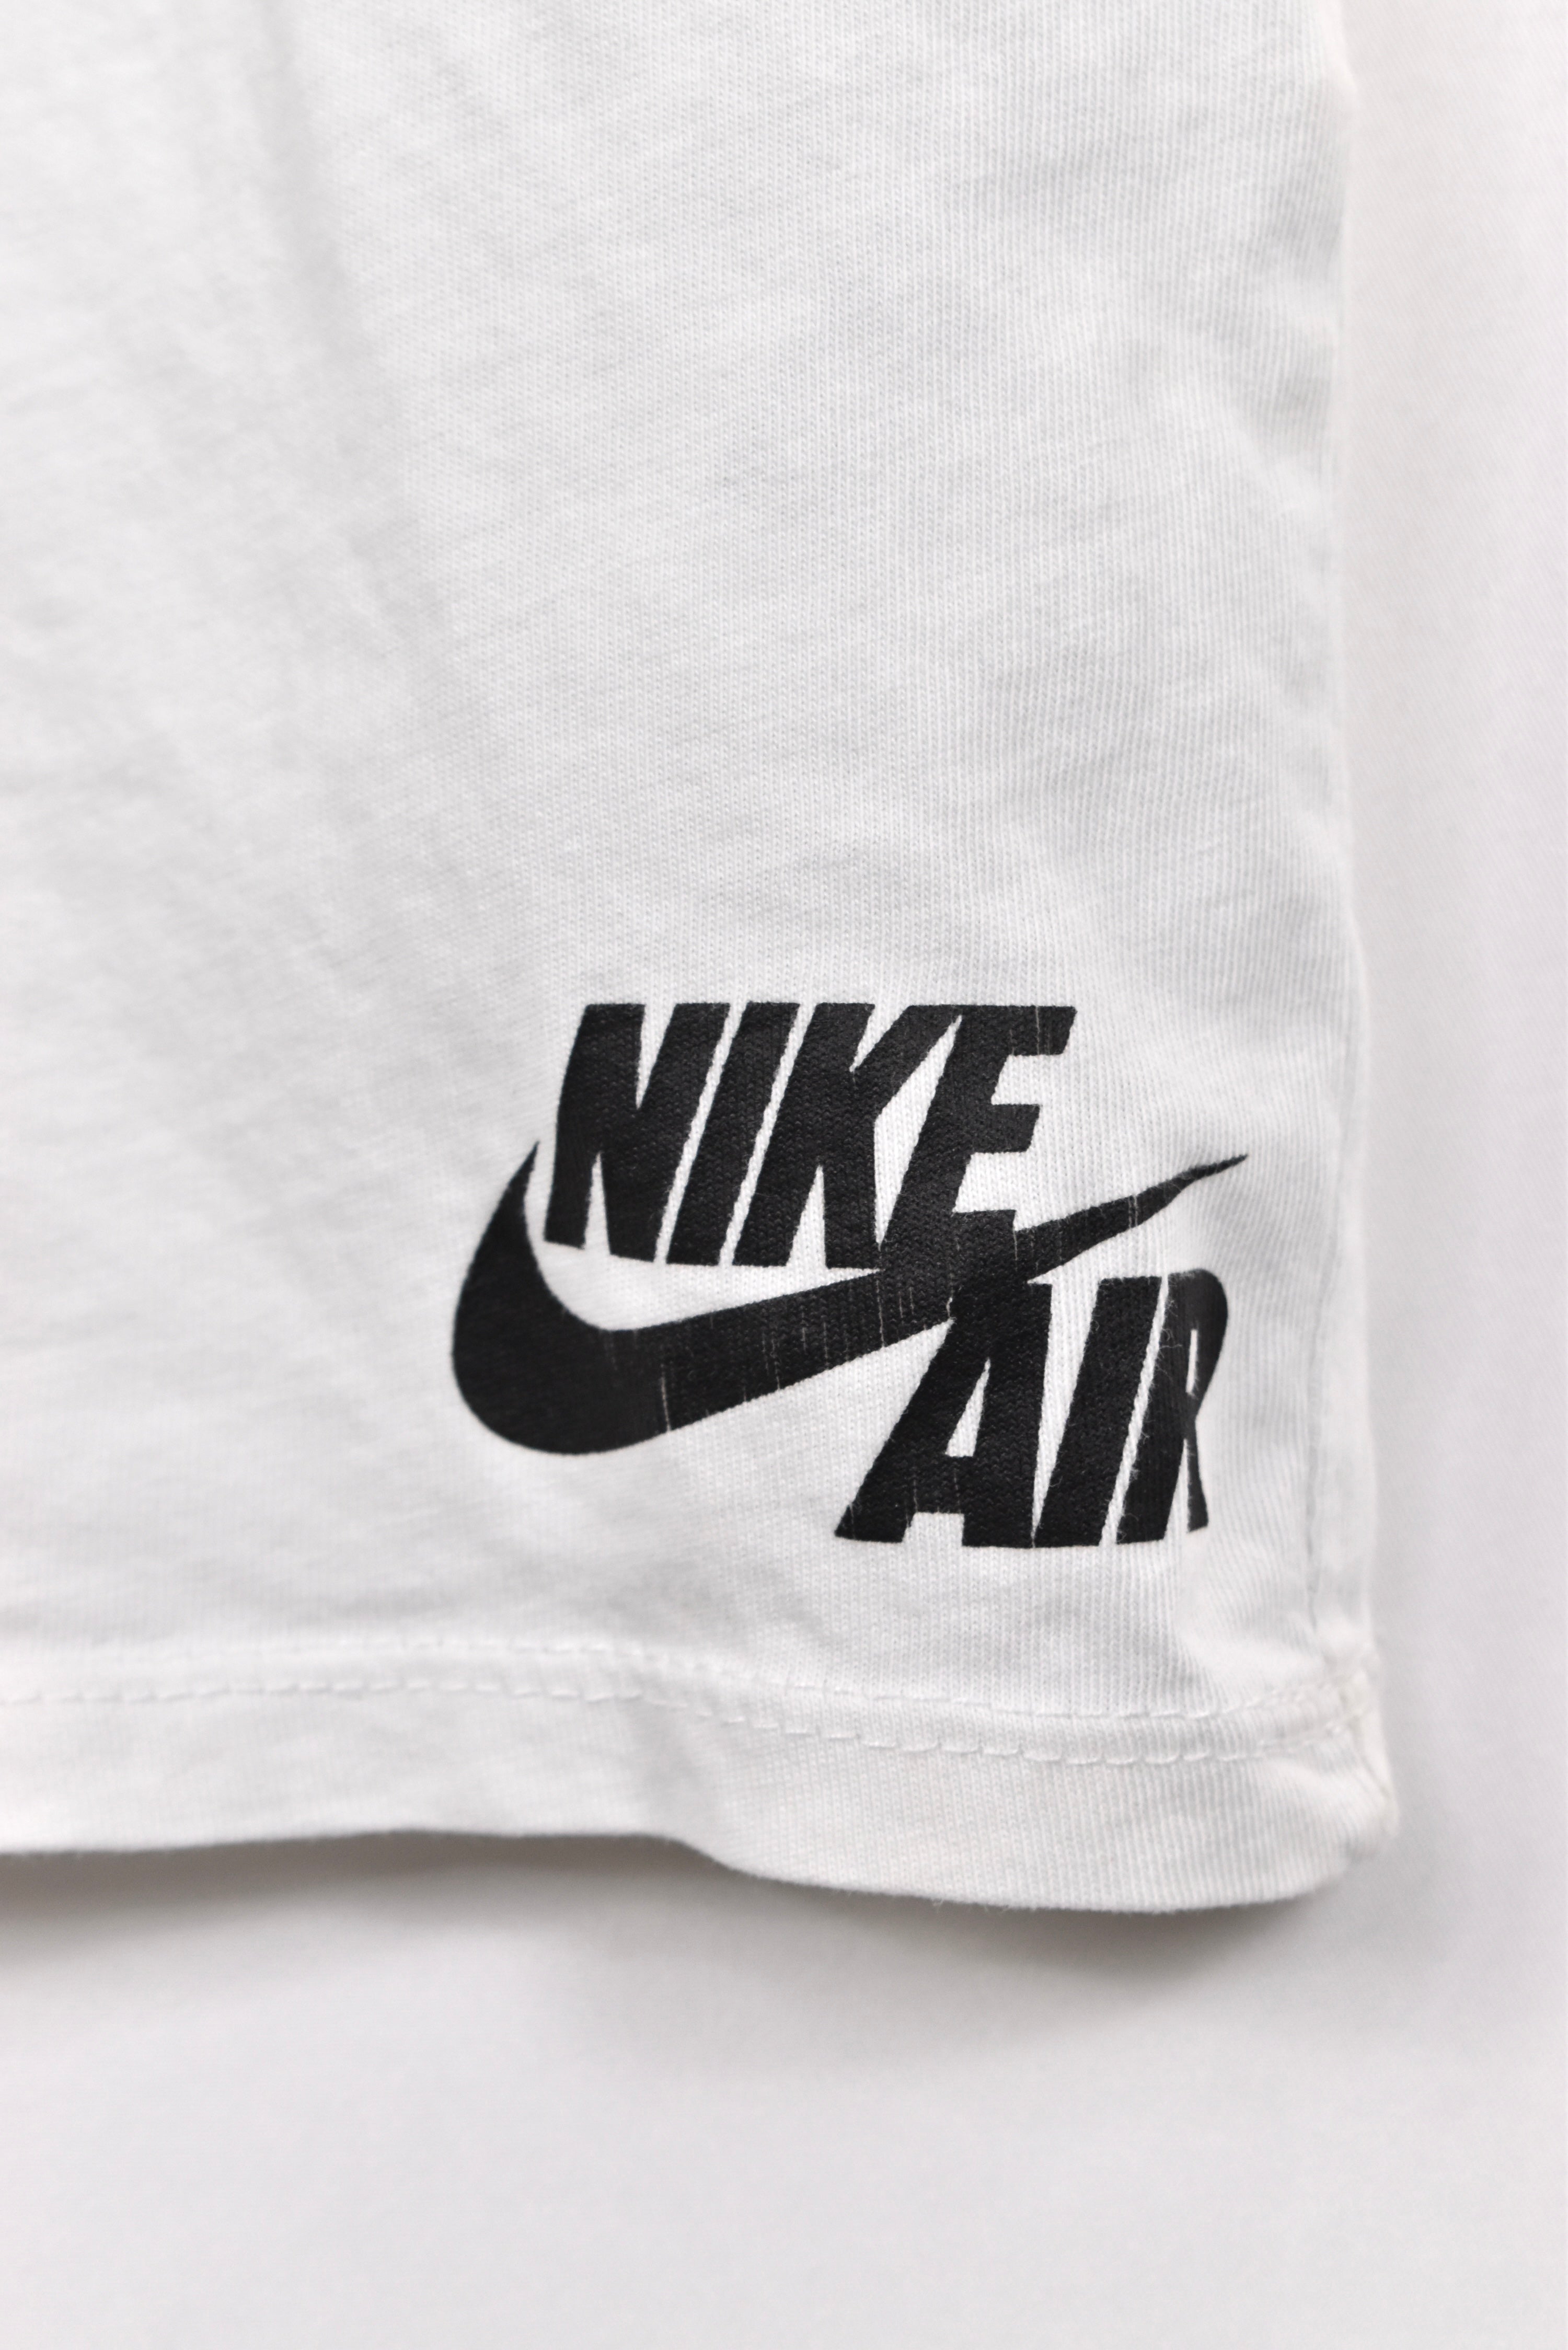 Modern Nike Air shirt, white graphic tee - AU Medium NIKE